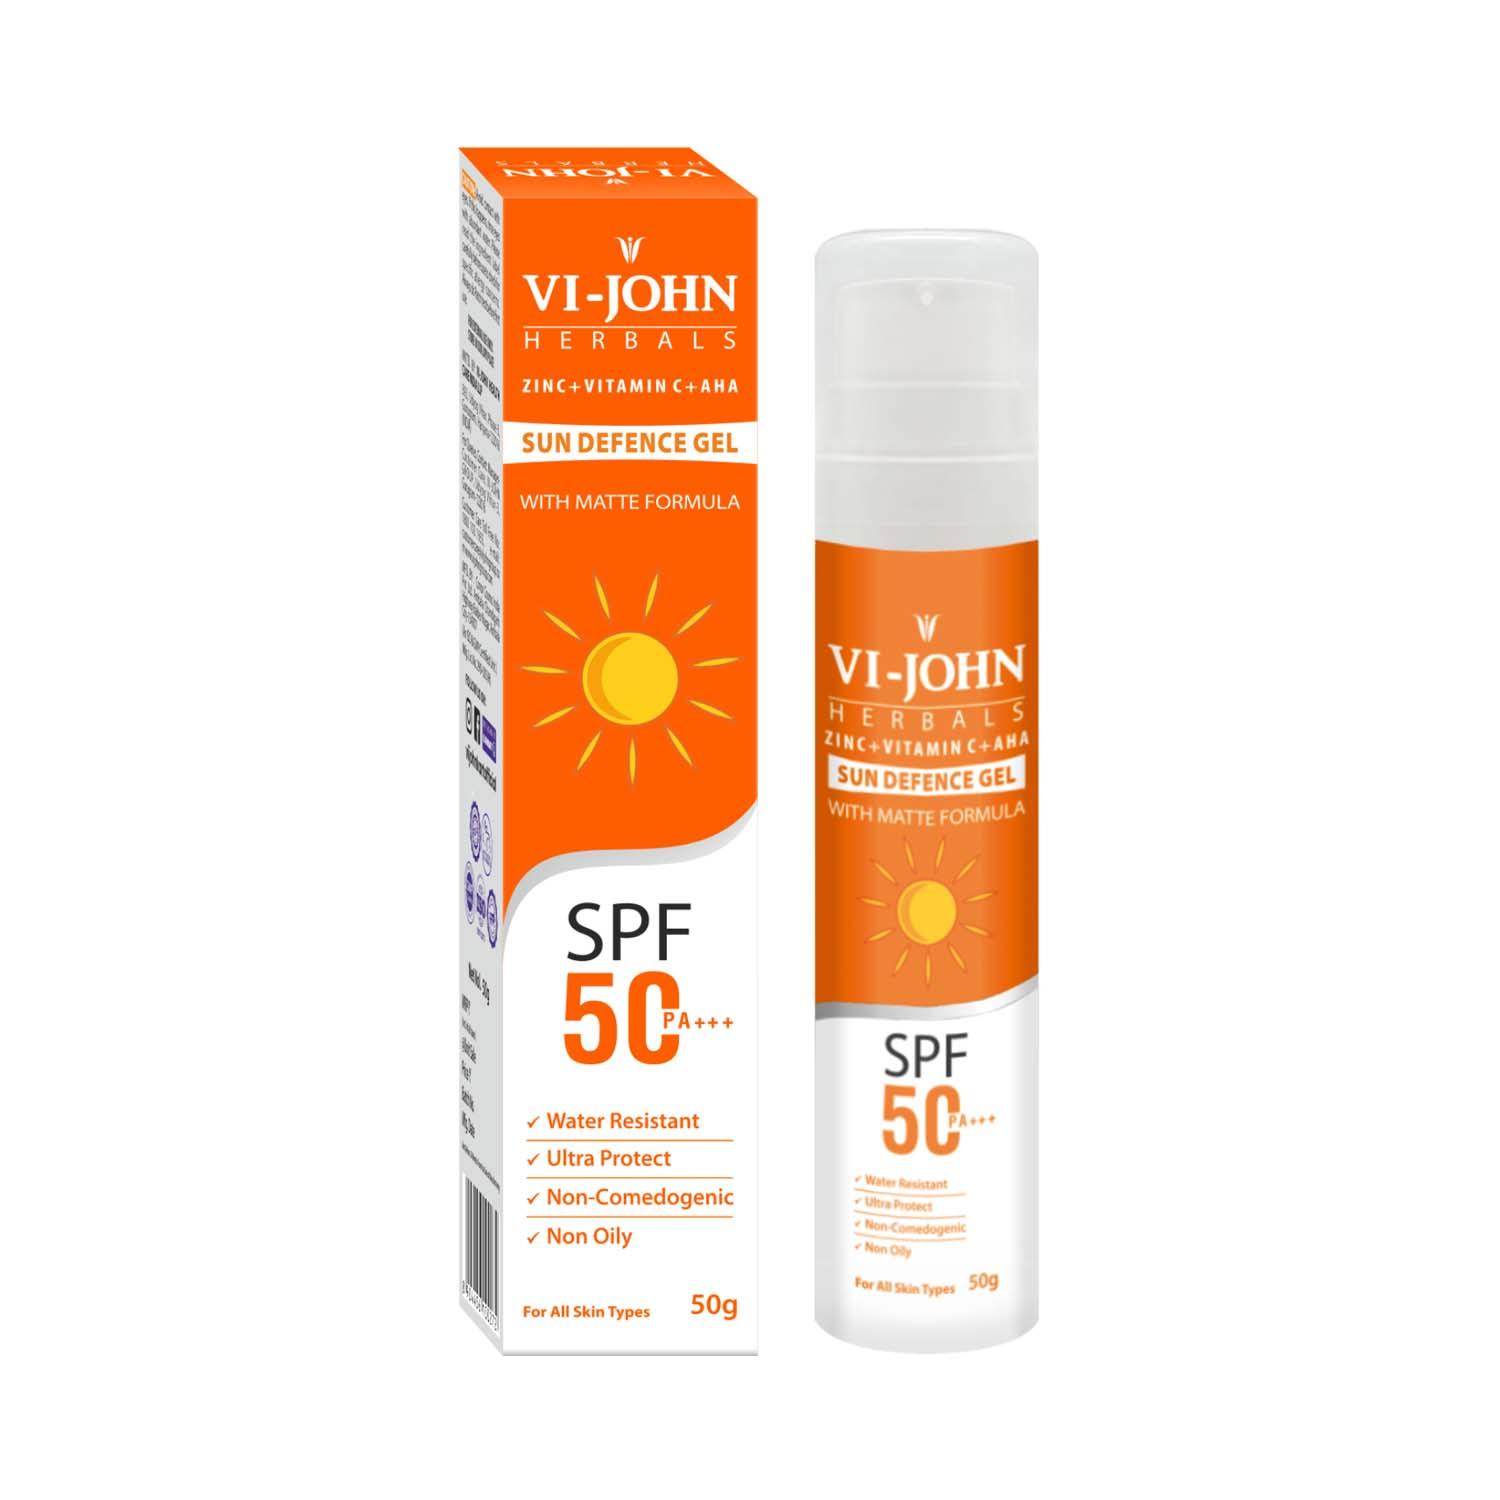 VI-JOHN Herbals Sun Defence Gel SPF 50 PA+++ with Matte Formula (50g)